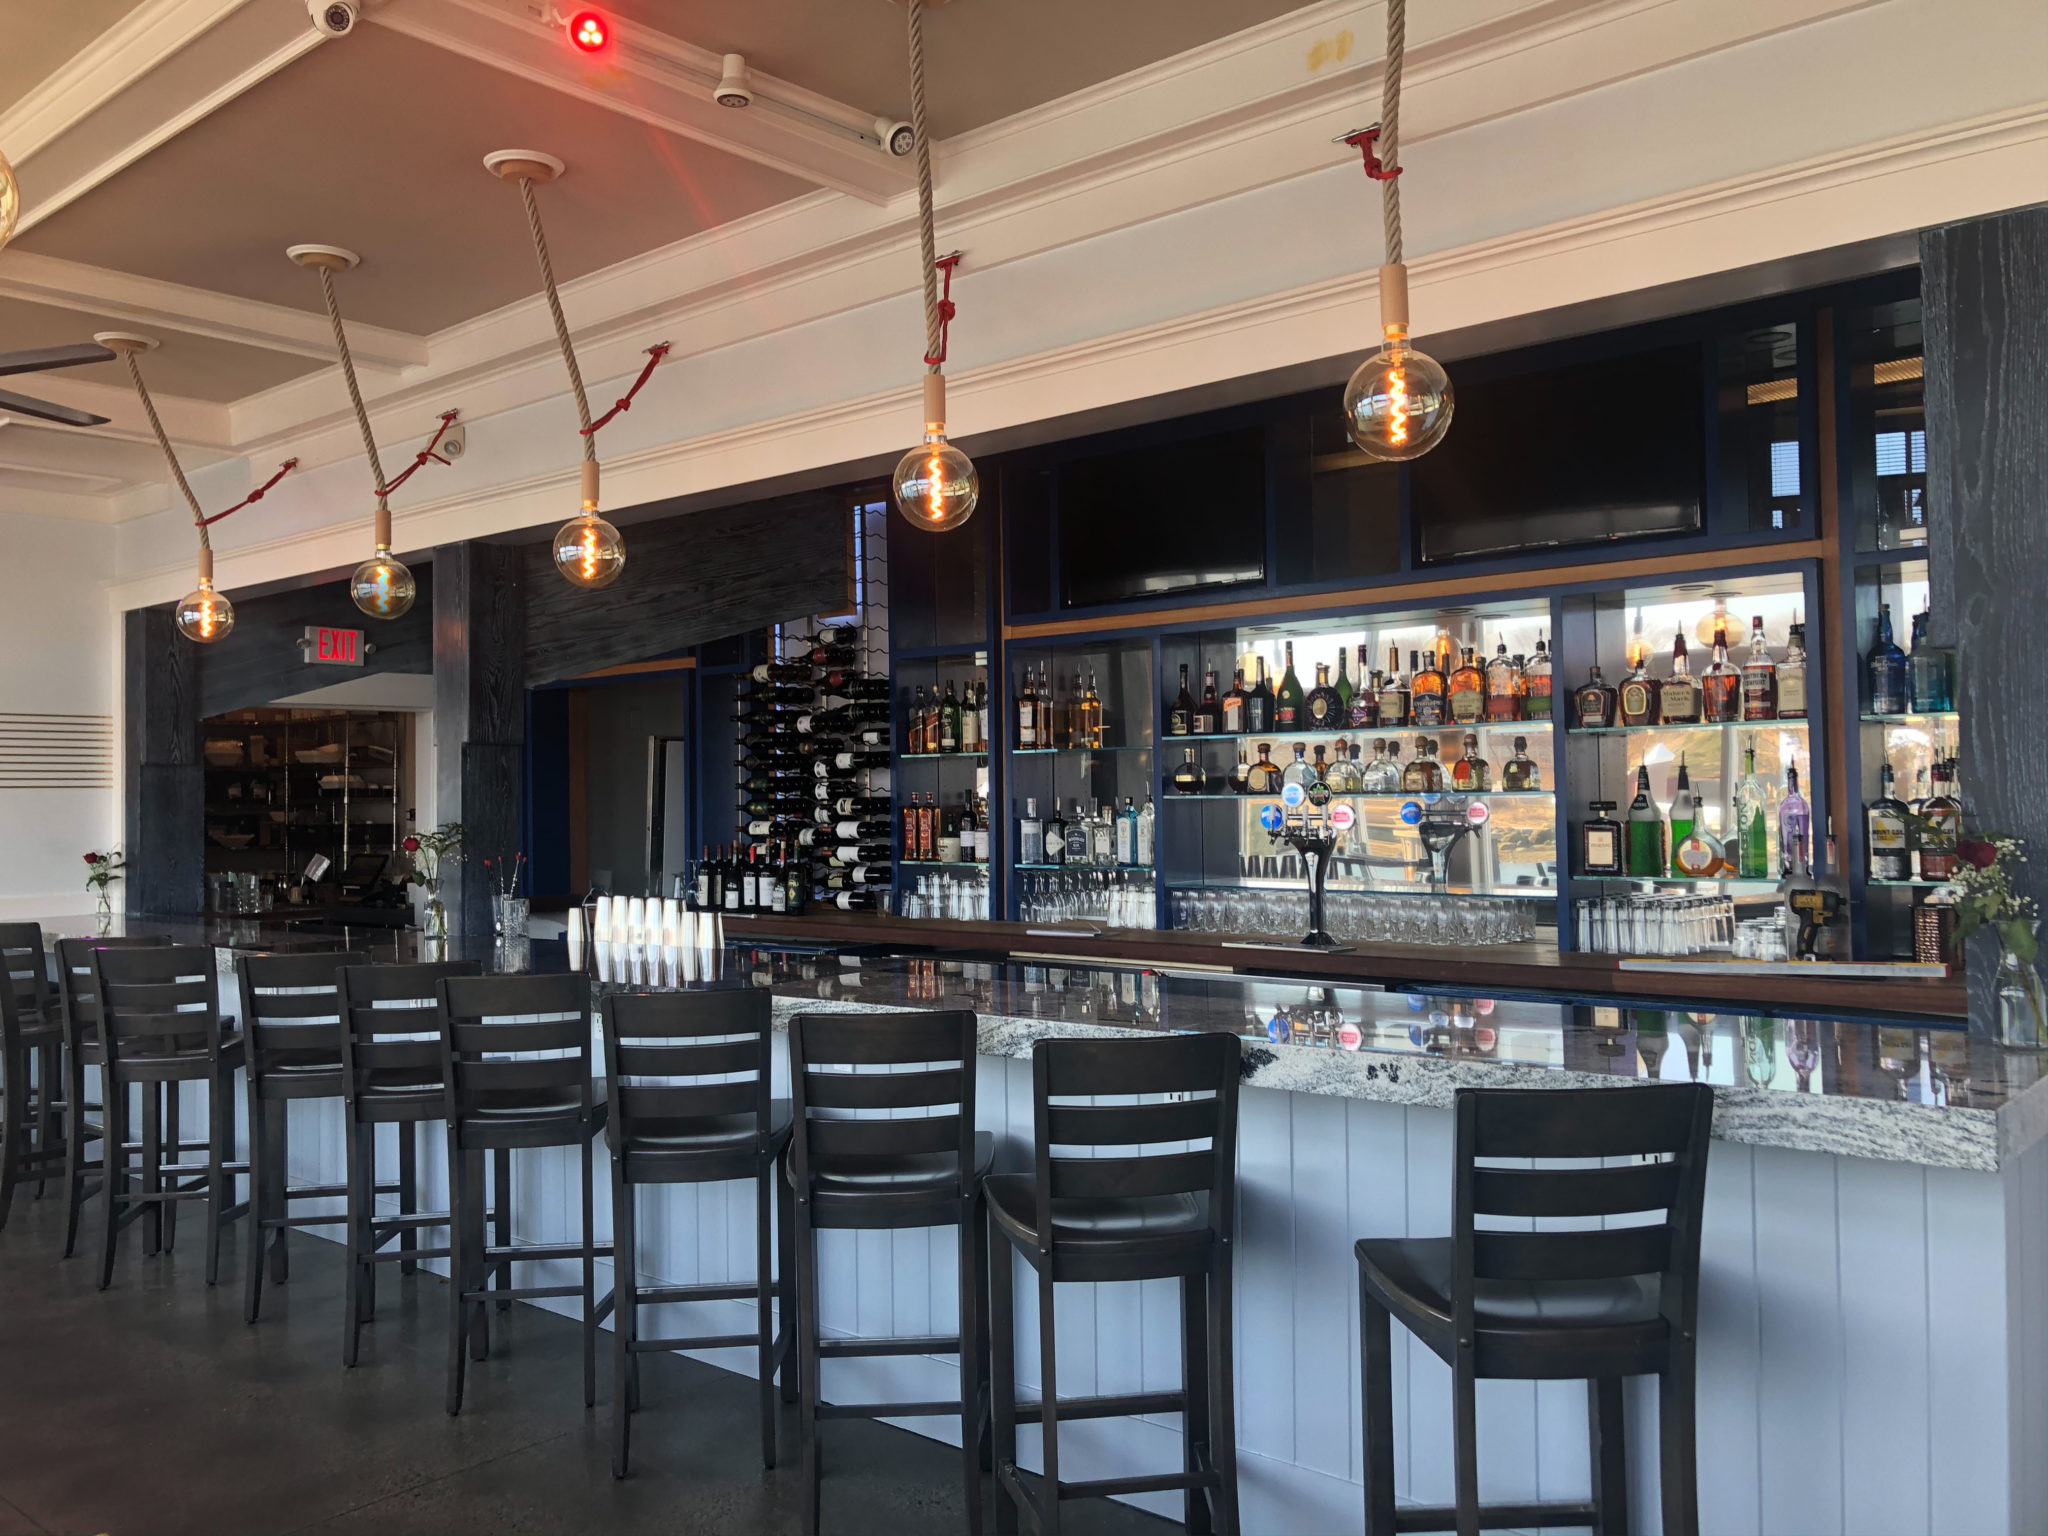 best bar in gloucester waterfront near me - Cape Ann's Marina & Resort